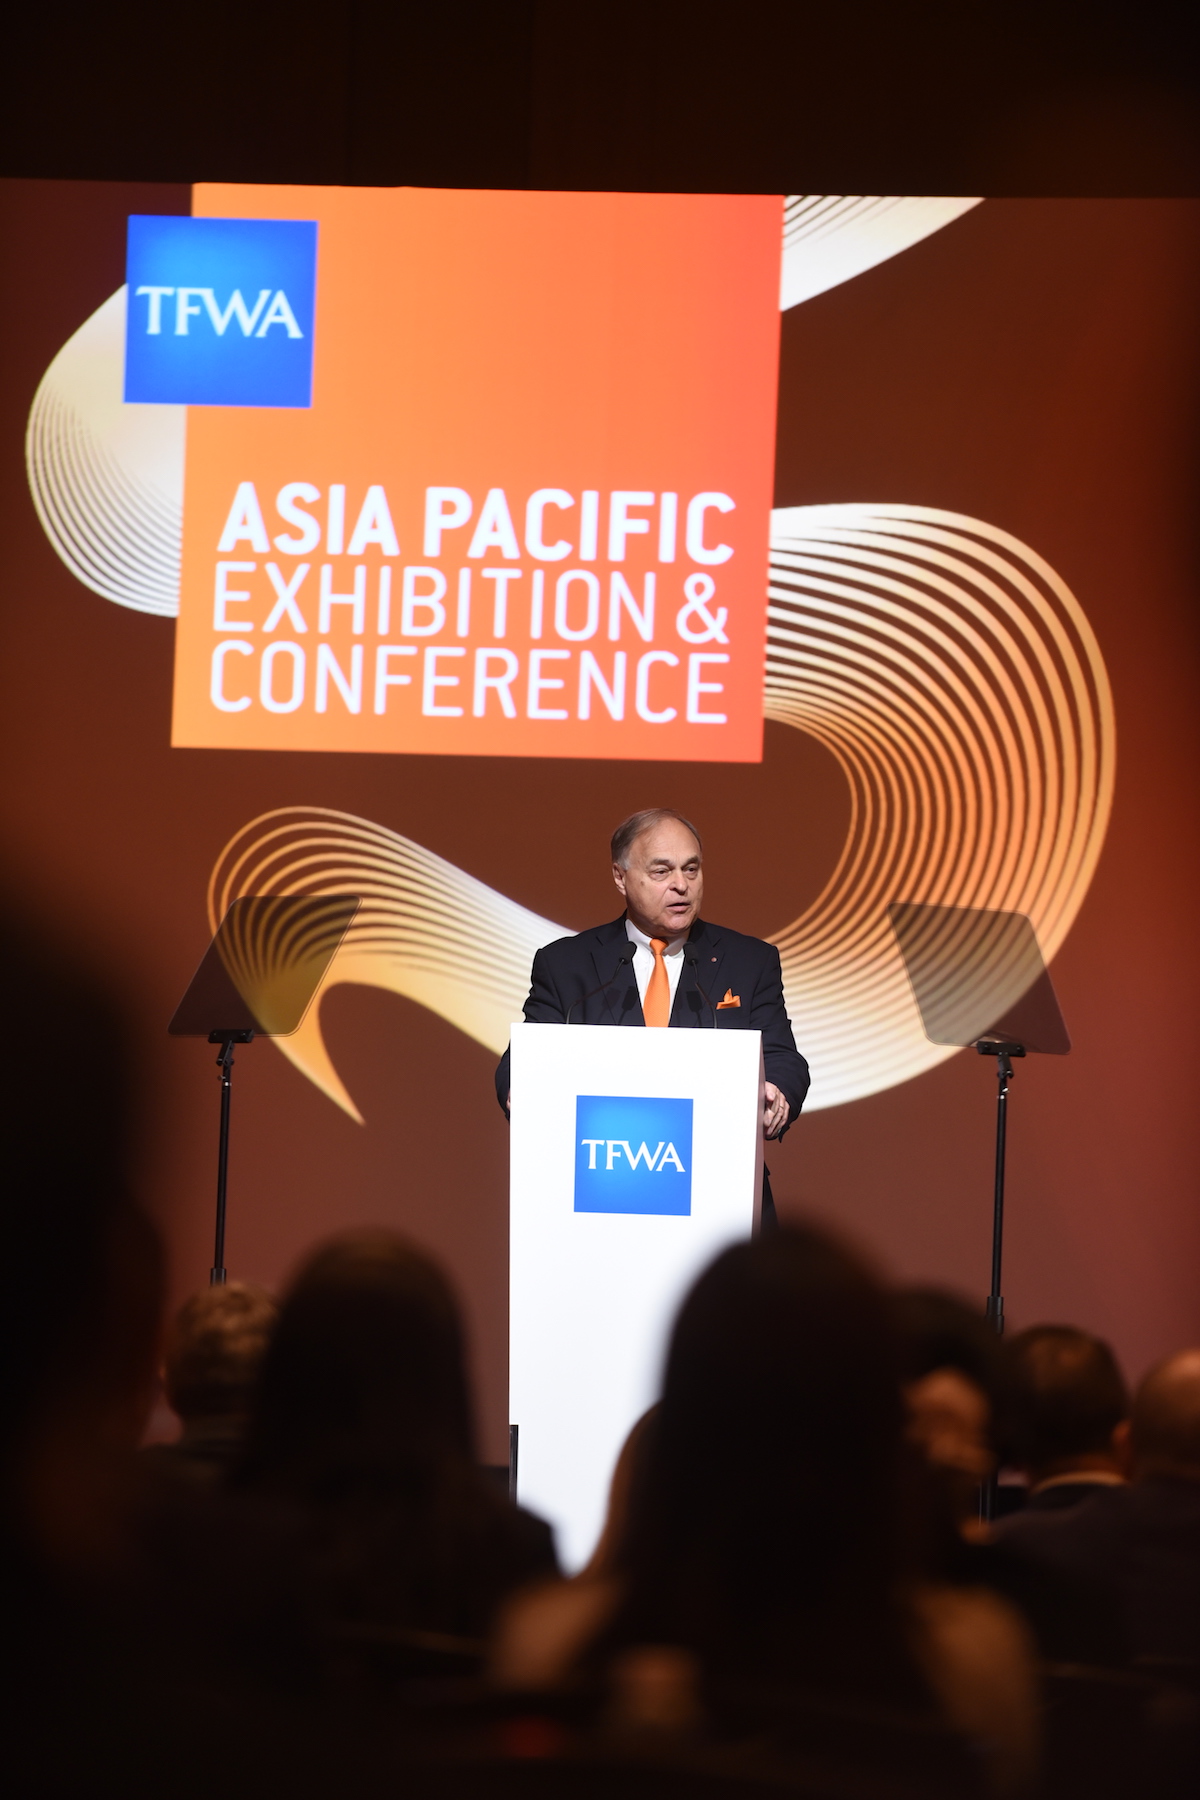 TFWA Asia Pacific Exhibition & Conference welcome address - TFWA President Erik Juul-Mortensen